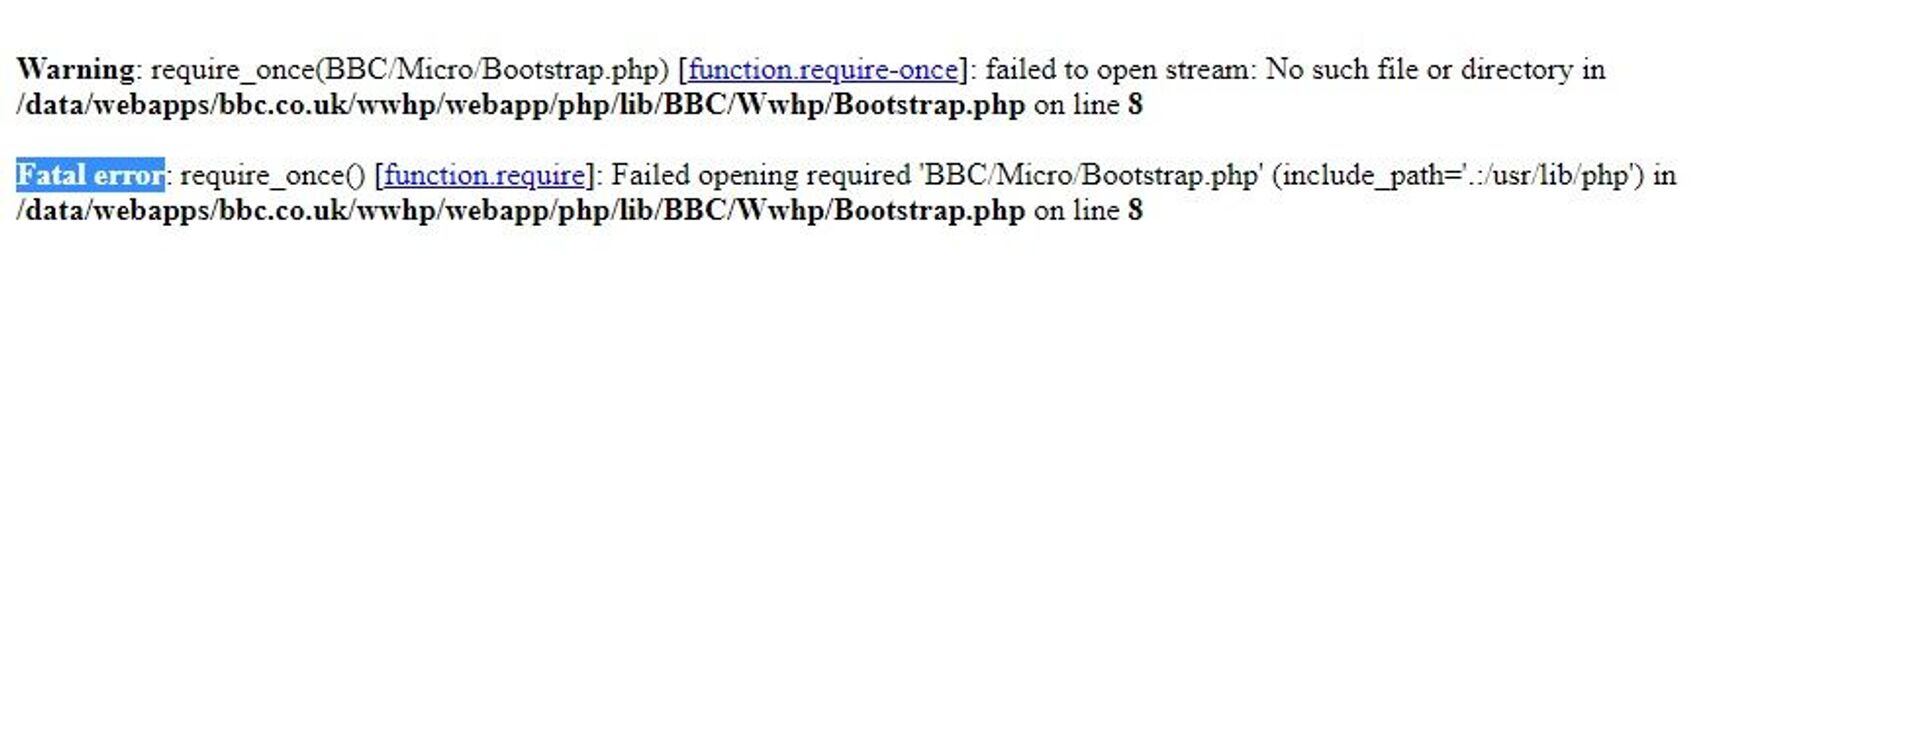 BBC Website's Homepage Goes Down With 'Fatal Error' - Sputnik International, 1920, 08.04.2021